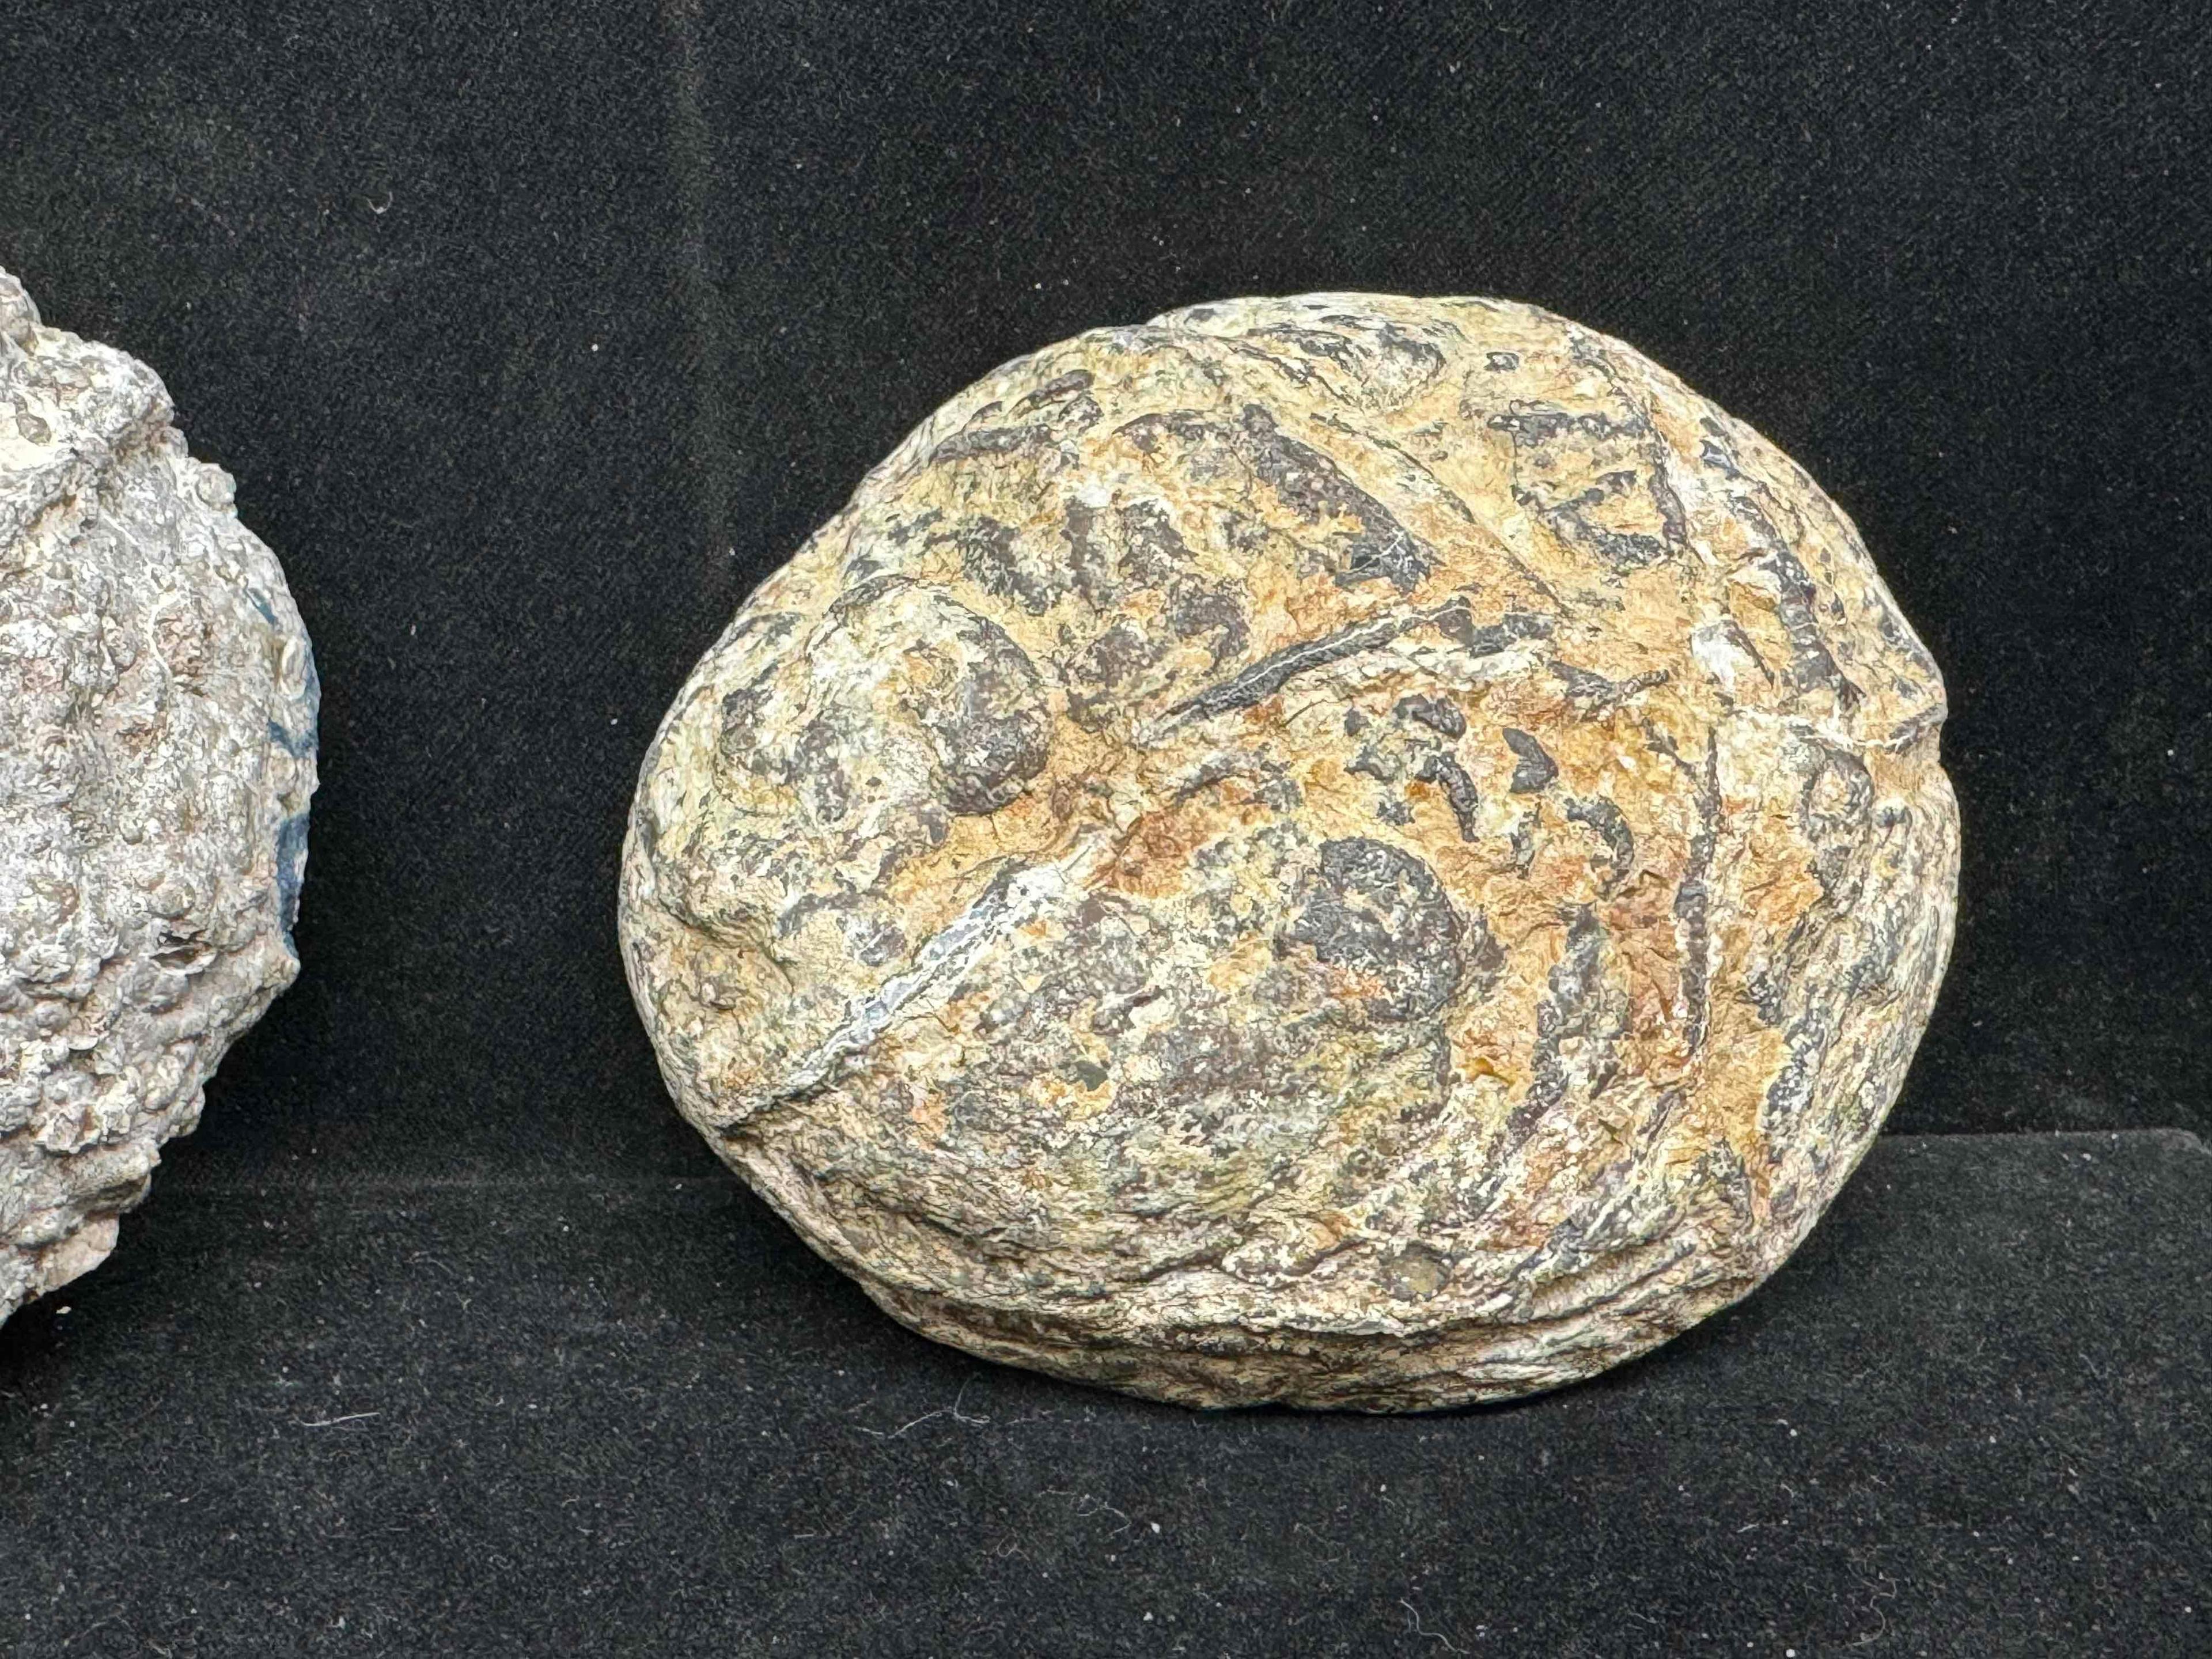 Pair of Large Geode Halves 3.4lb